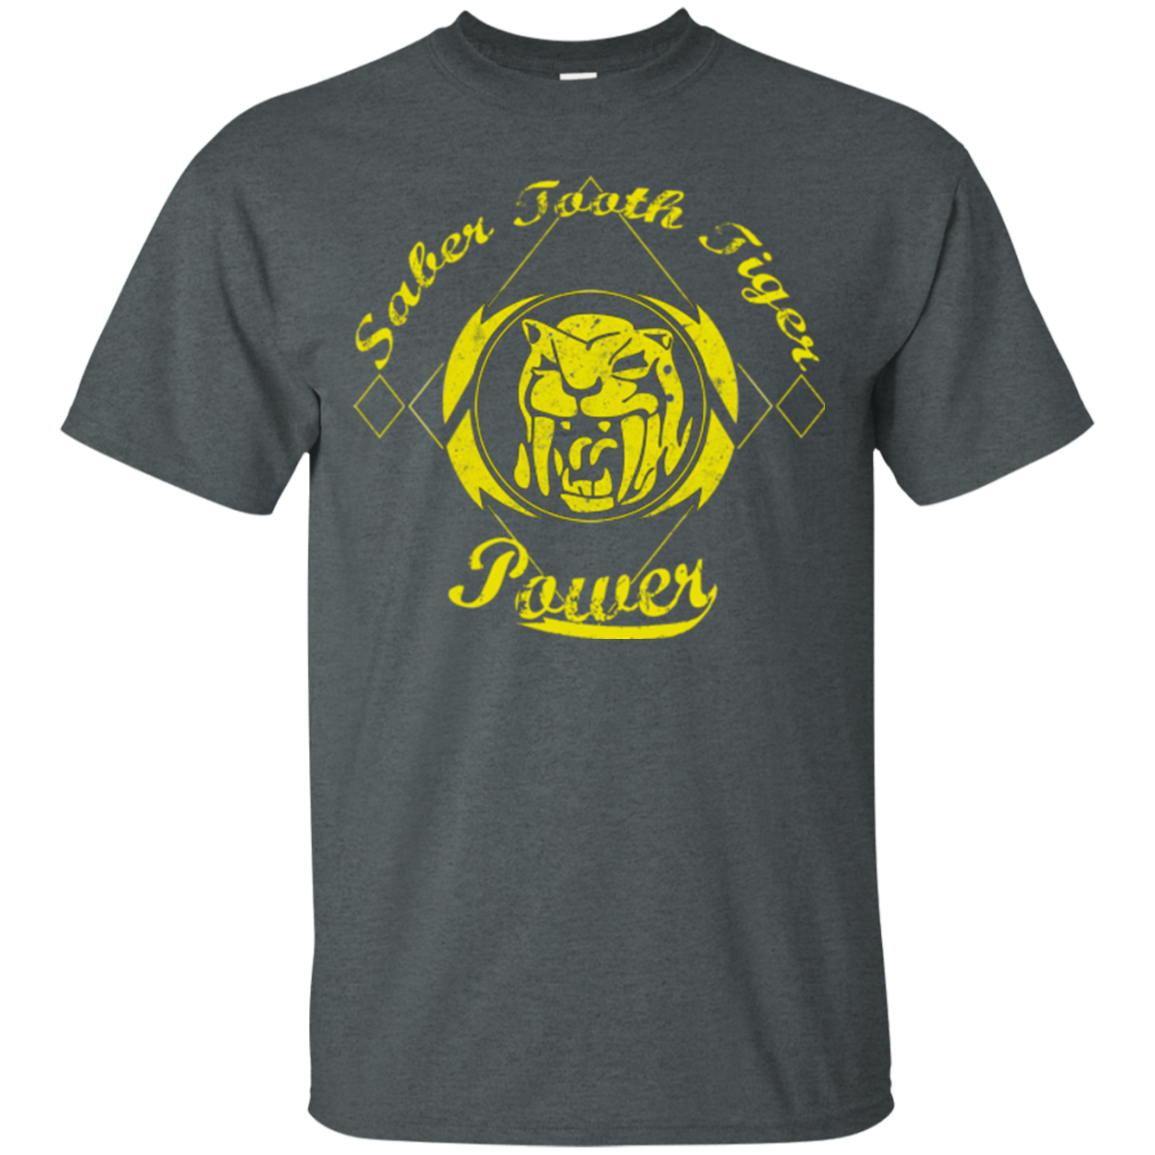 Saber Tooth Tiger (1) T-Shirt